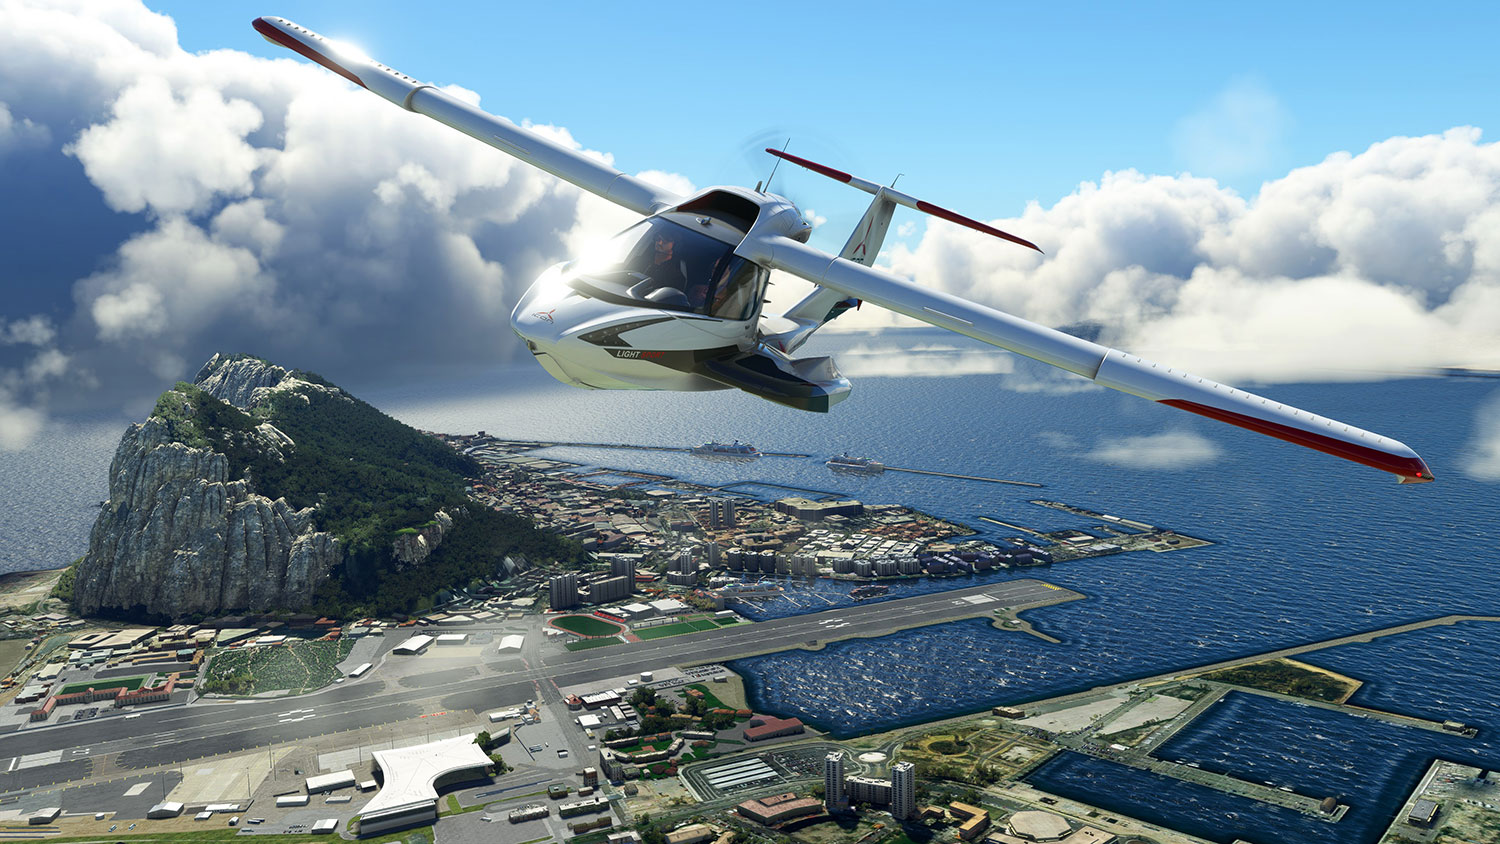 Microsoft Flight Simulator - Premium Deluxe + CRJ 550/700 Limited Bundle